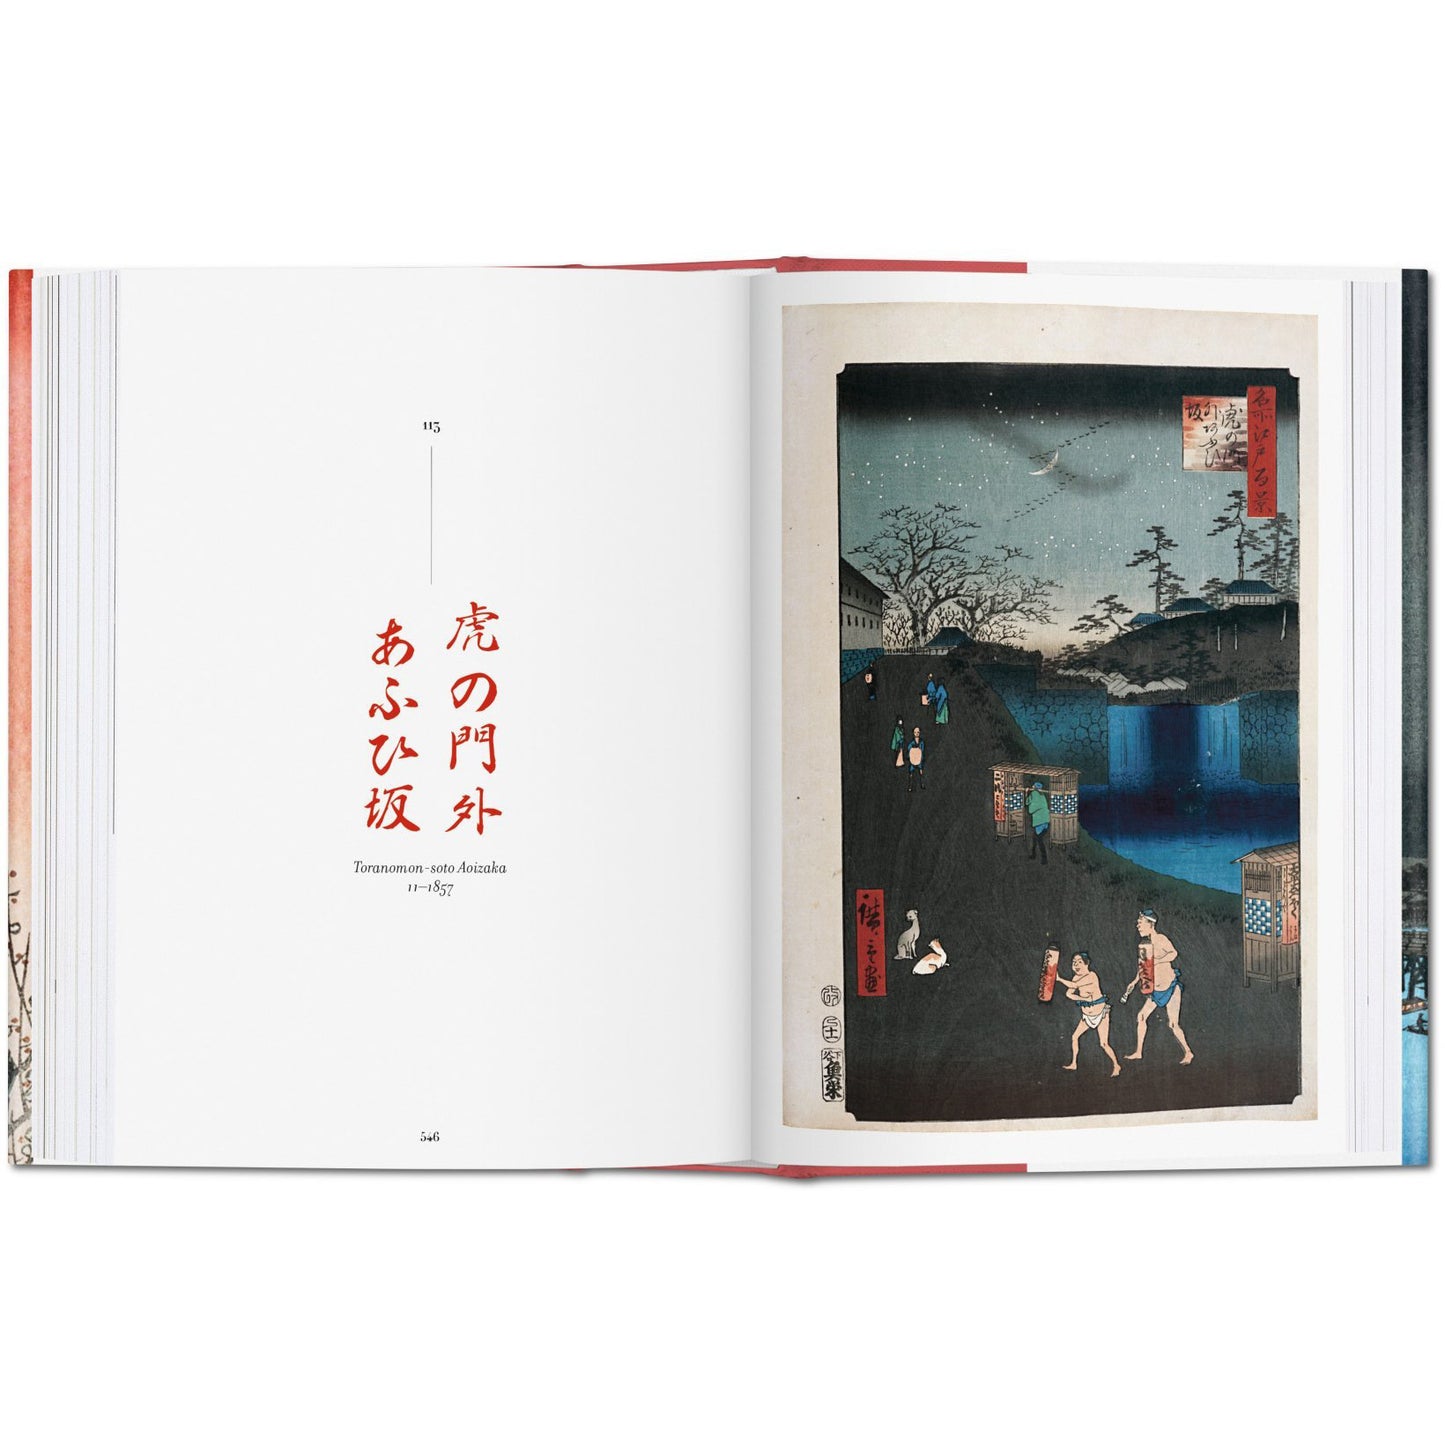 Hiroshige: cien vistas famosas de Edo, las planchas completas